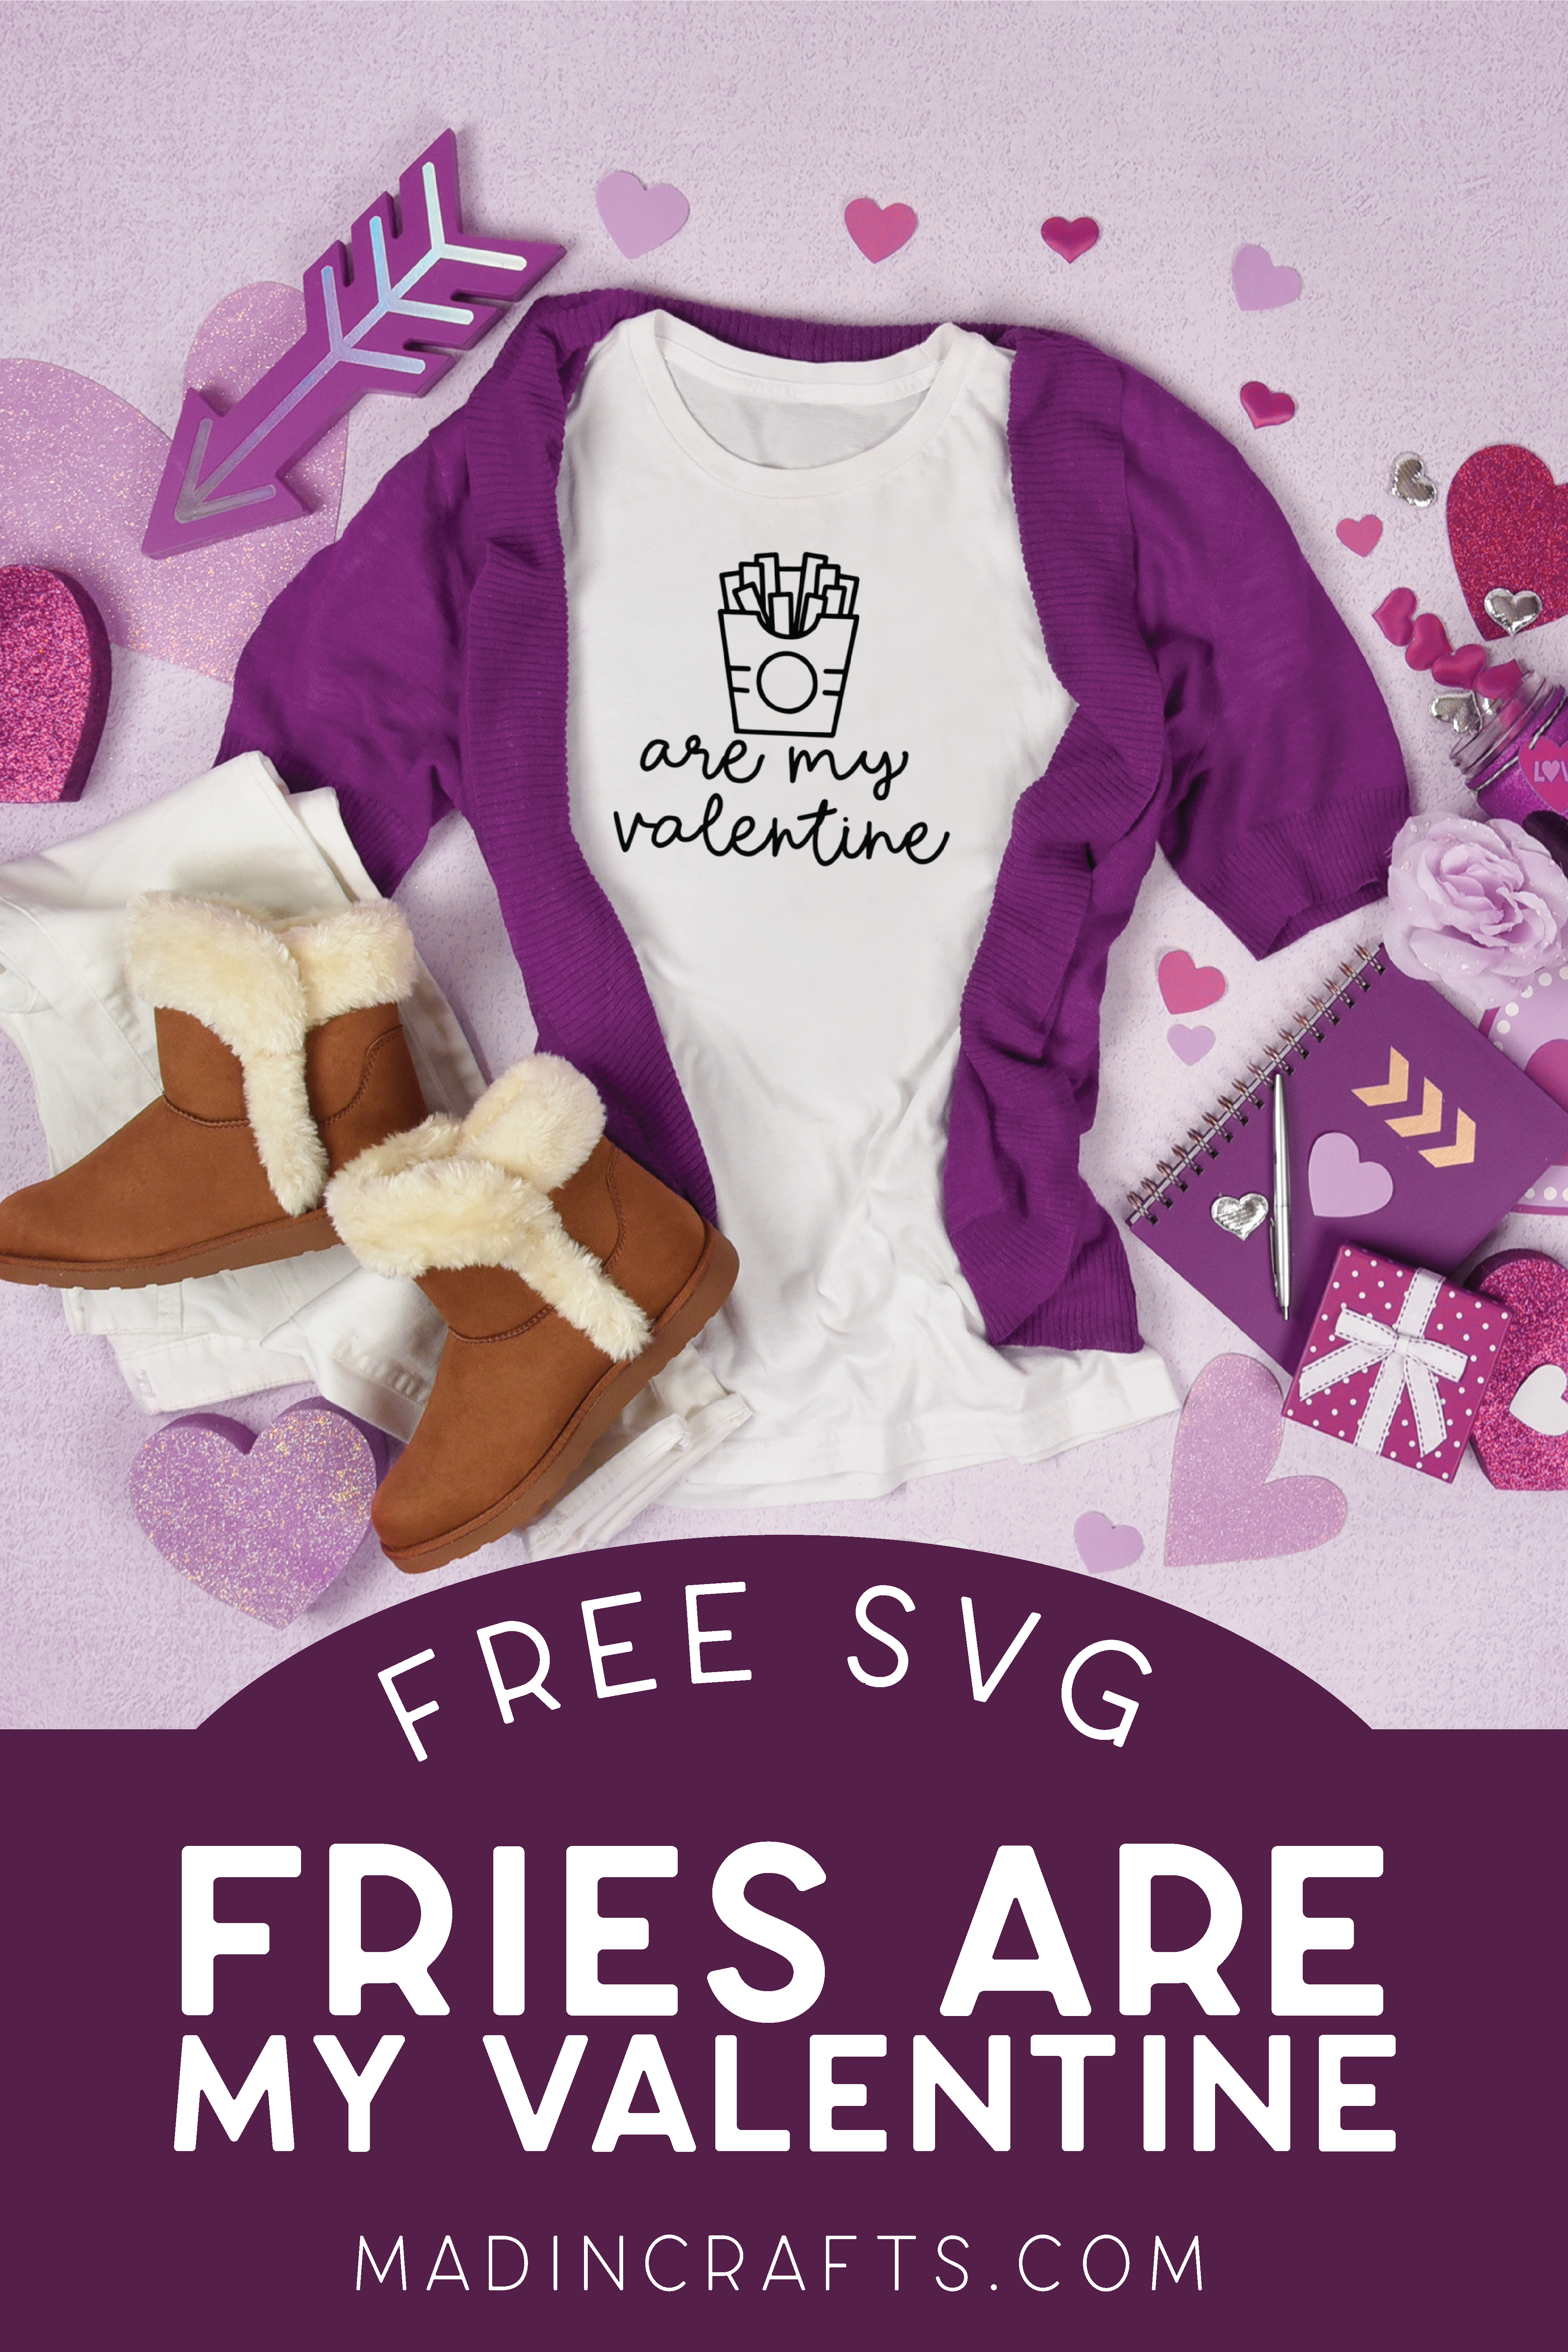 Fries are my Valentine SVG on a white shirt near Valentine's Day decor